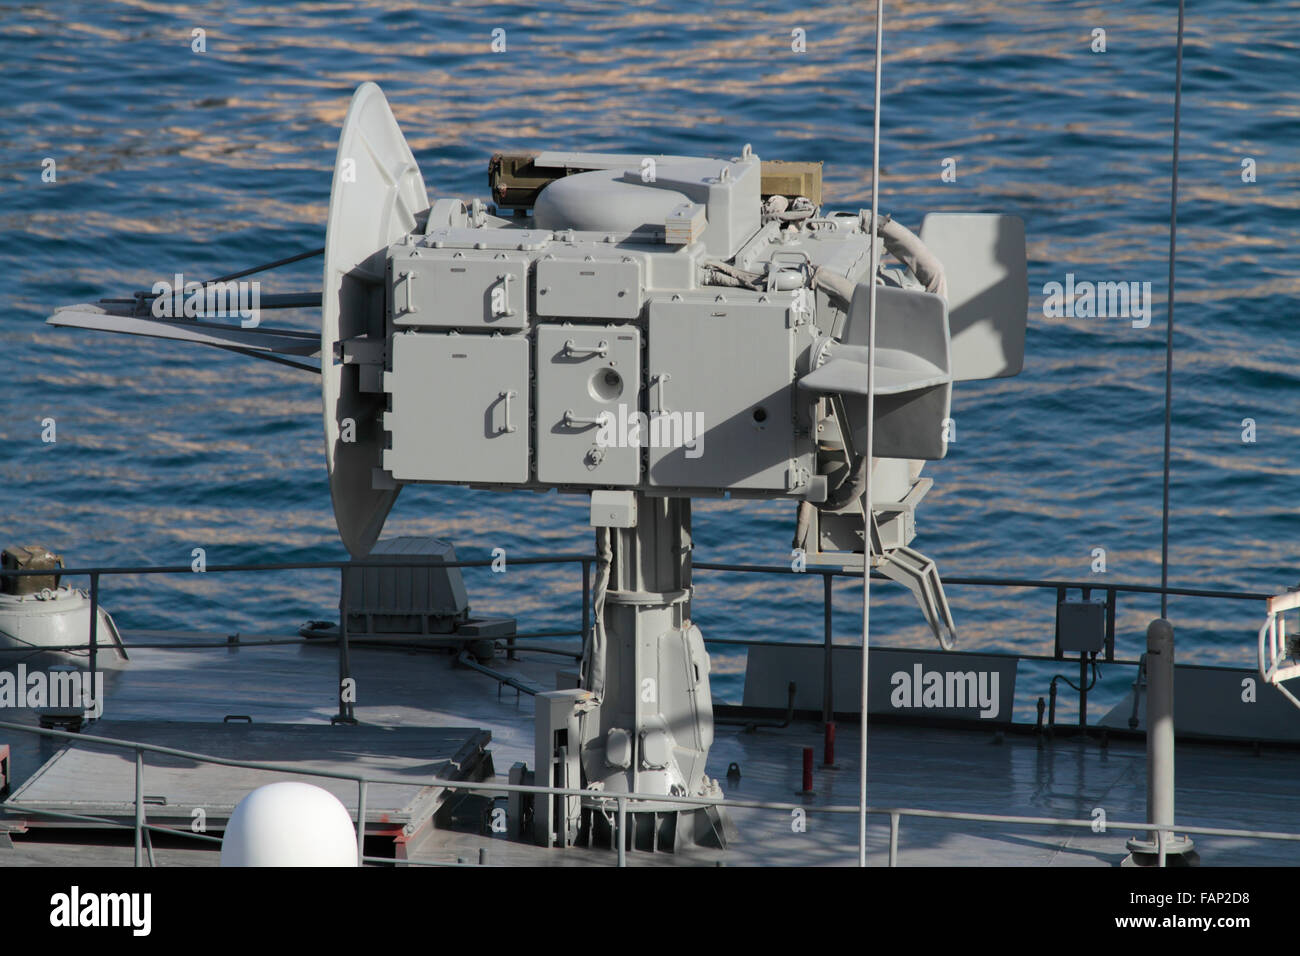 The Kite Screech target tracking radar on board the Russian Navy frigate Yaroslav Mudry Stock Photo